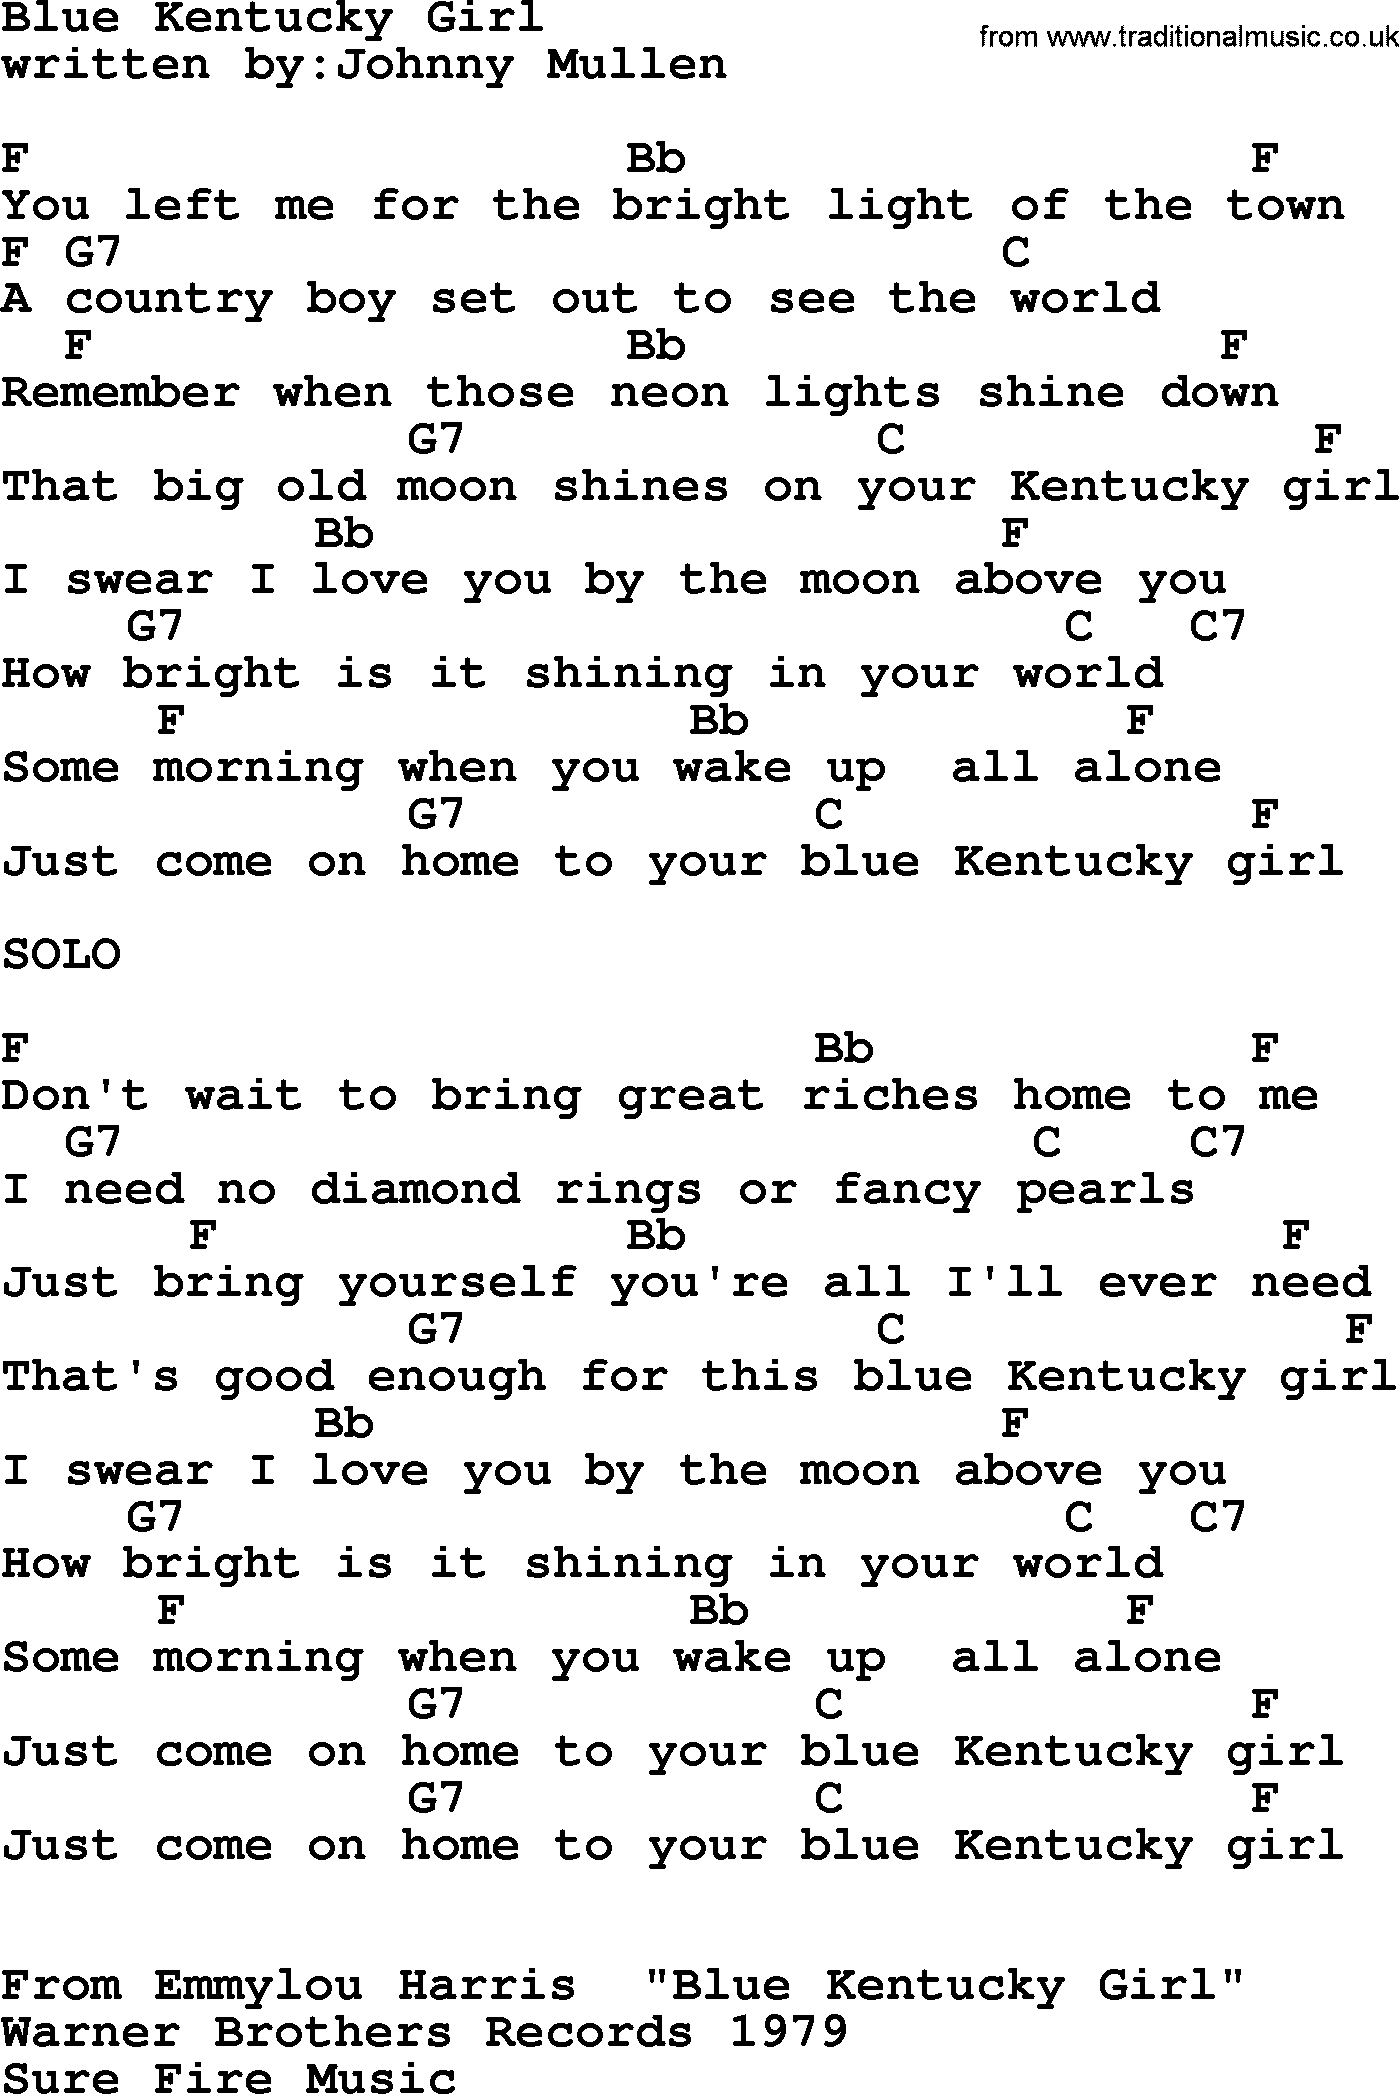 Emmylou Harris song: Blue Kentucky Girl lyrics and chords